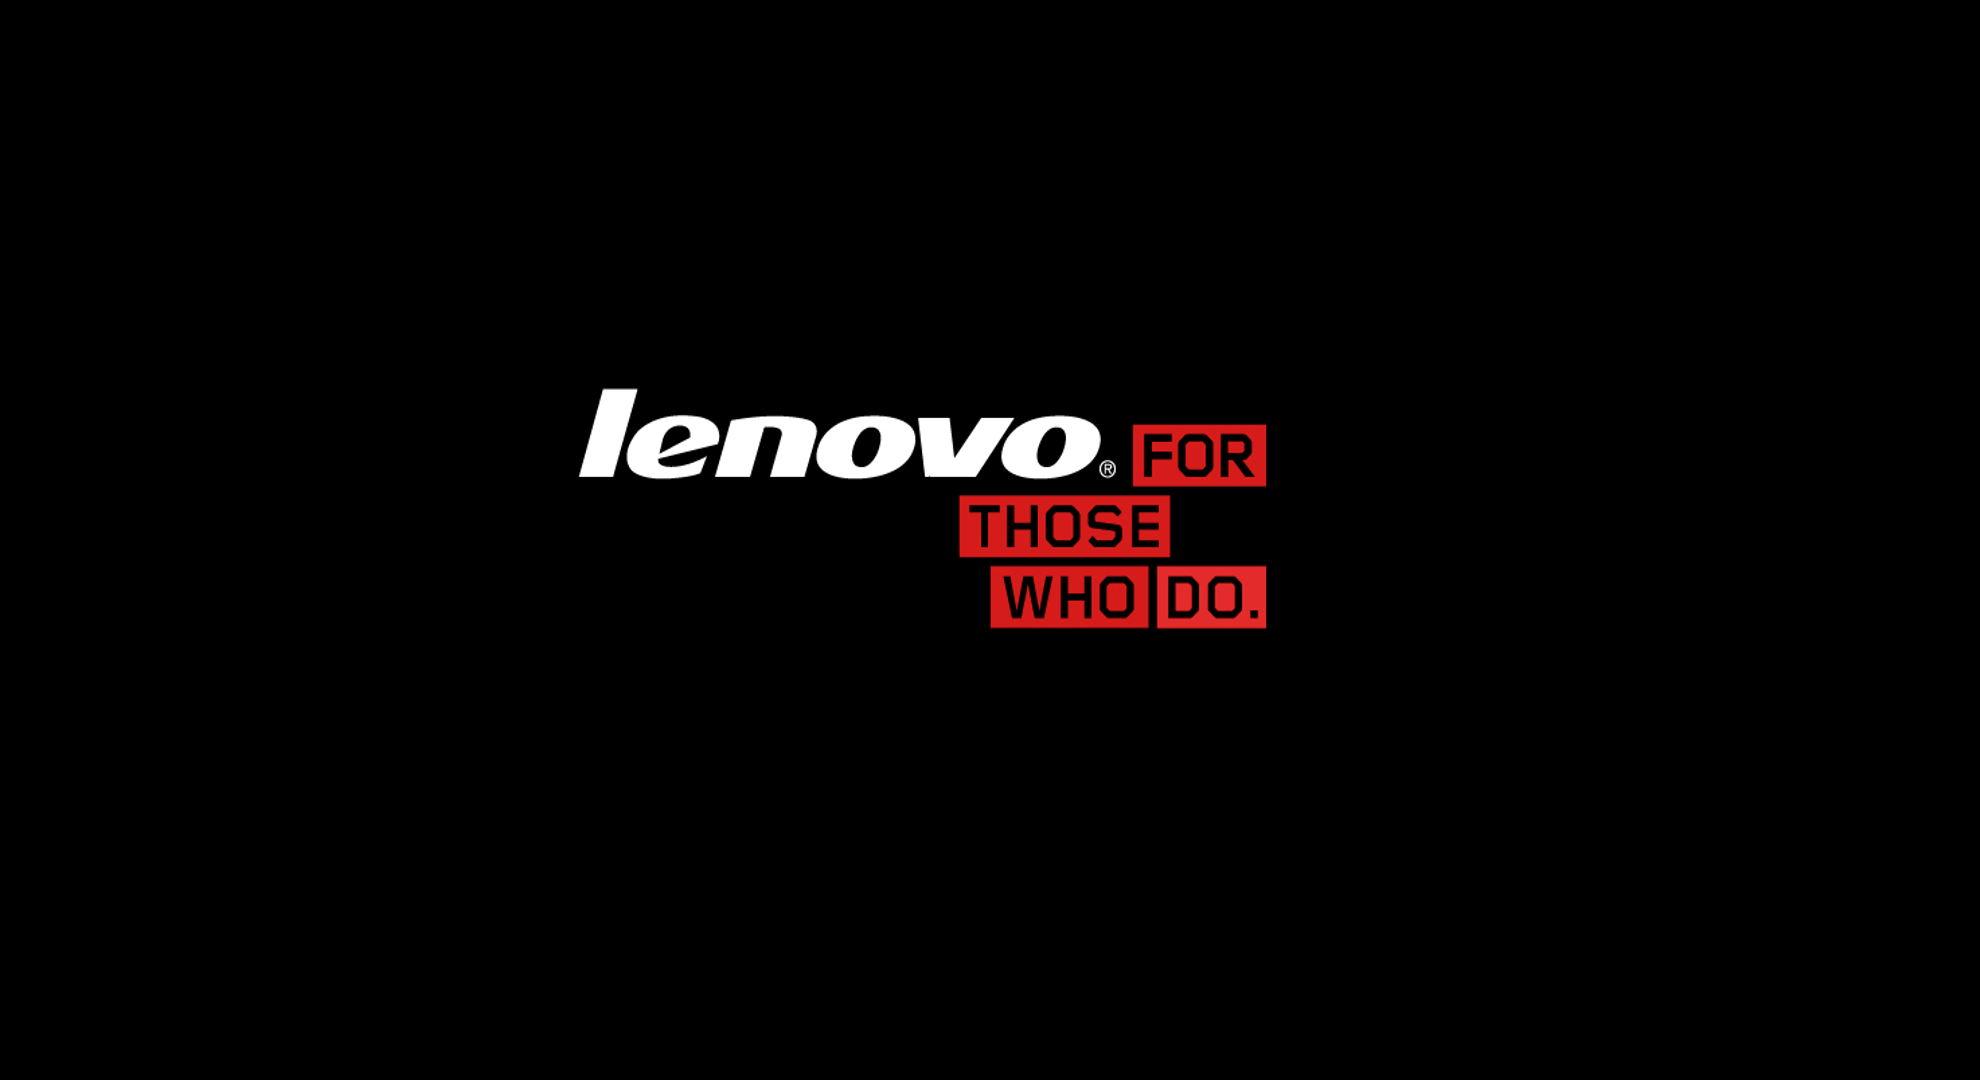 Lenovo HD Wallpapers - Wallpaper Cave